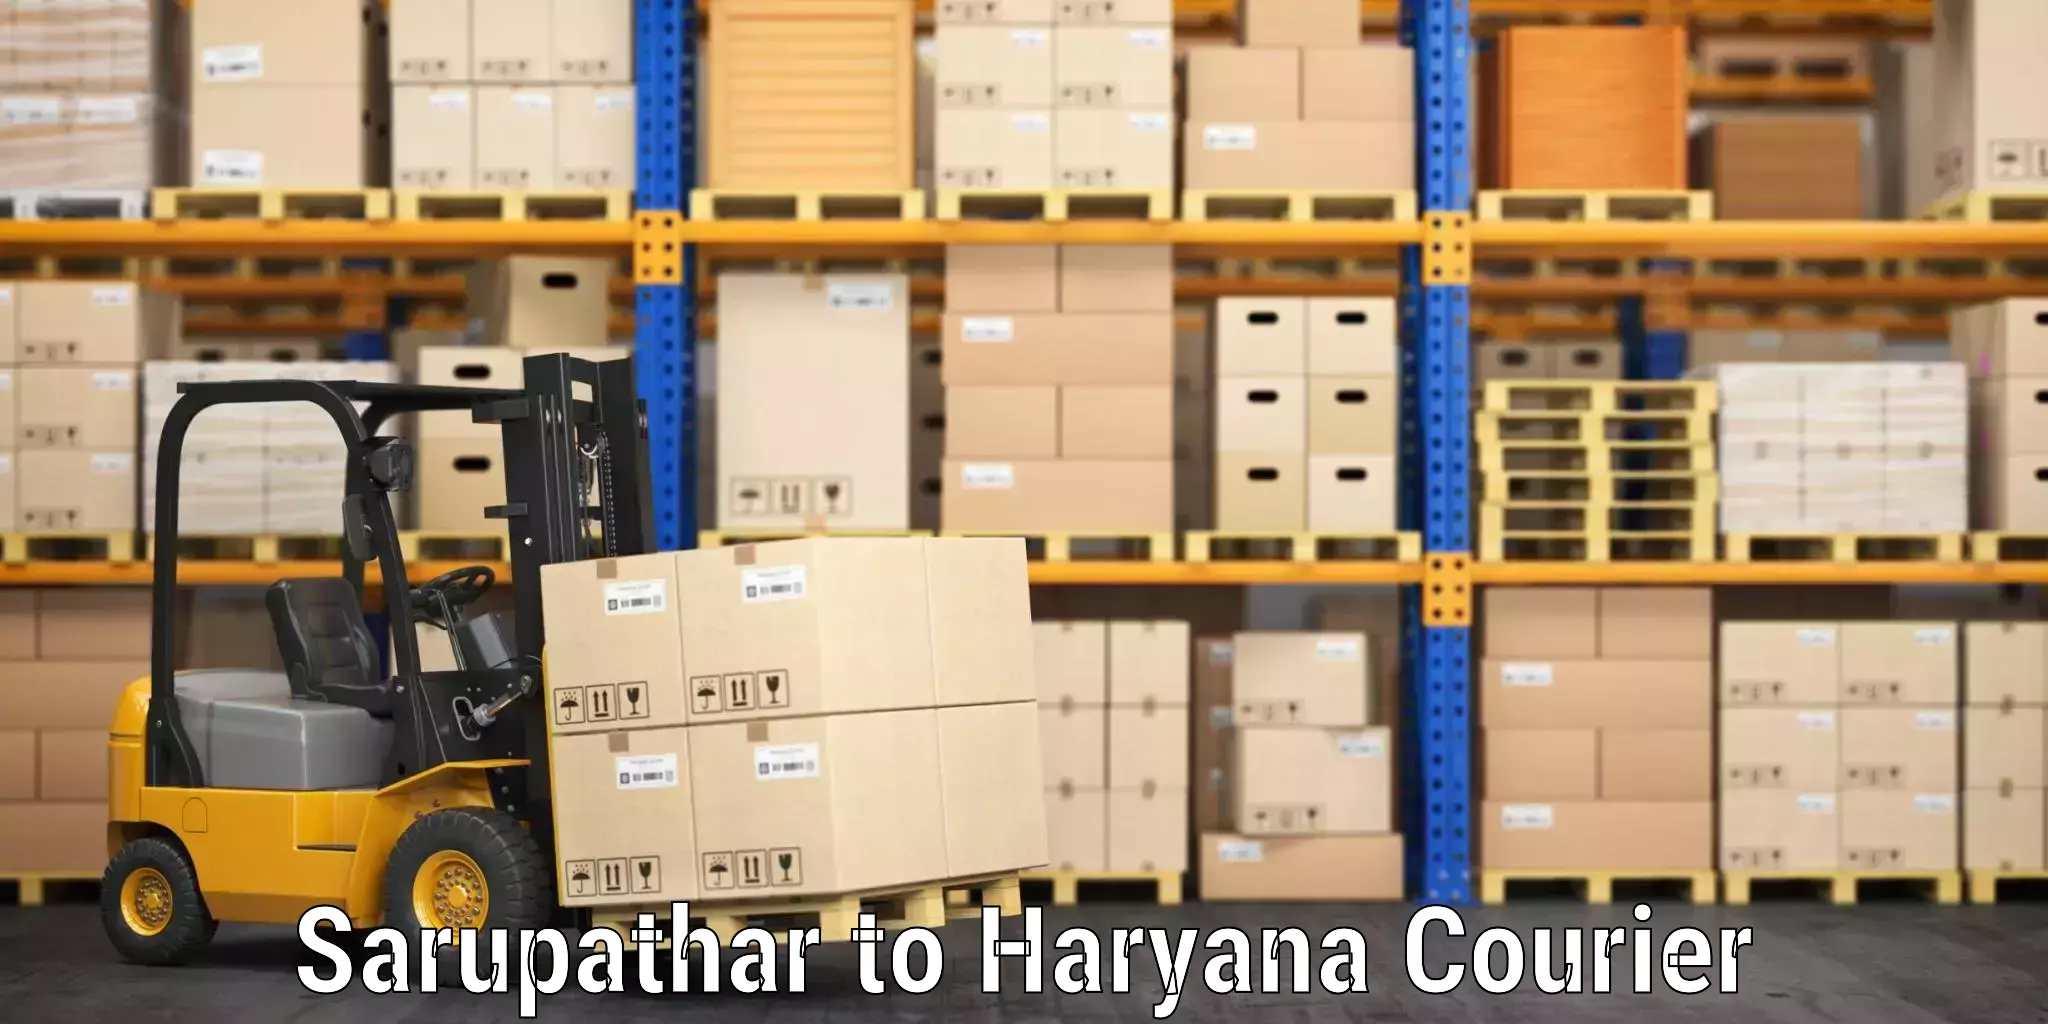 Luggage transfer service Sarupathar to NCR Haryana